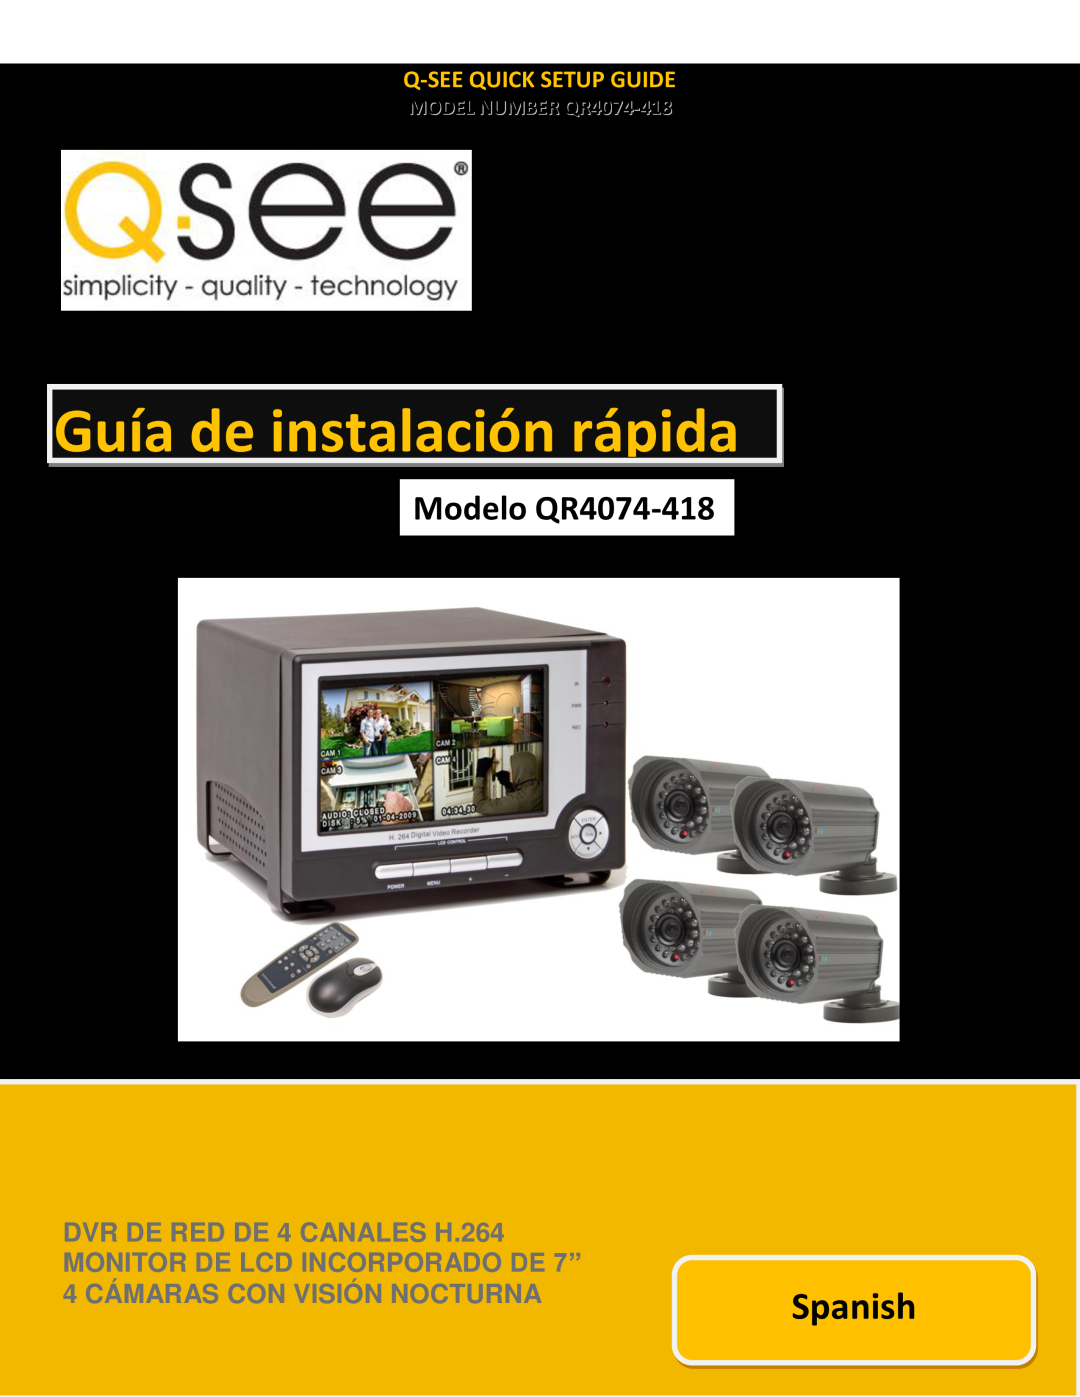 Q-See Guía de instalación rápida, Spanish, Modelo QR4074-418, Q-Seequick Setup Guide, MODEL NUMBER QR4074-418, P a g e 